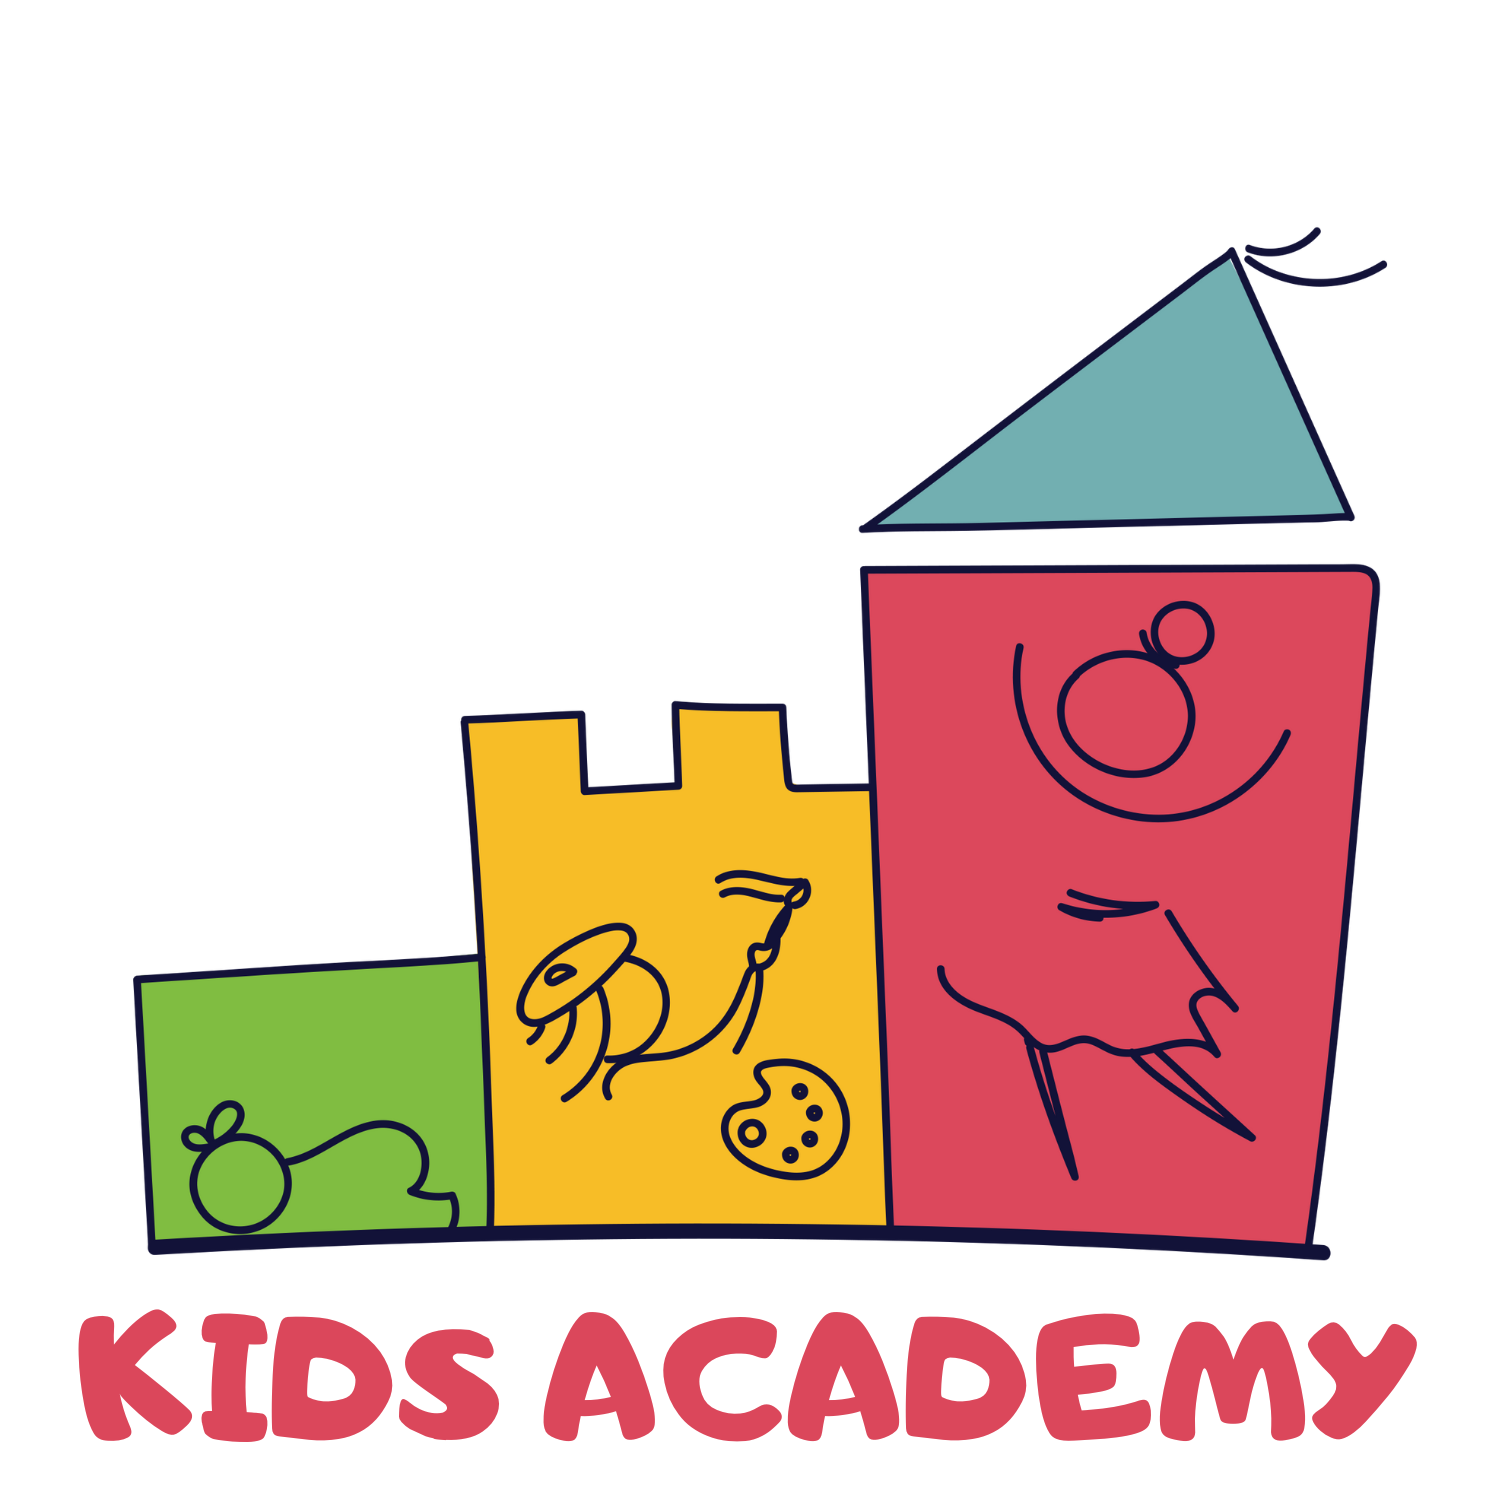 Kids Academy